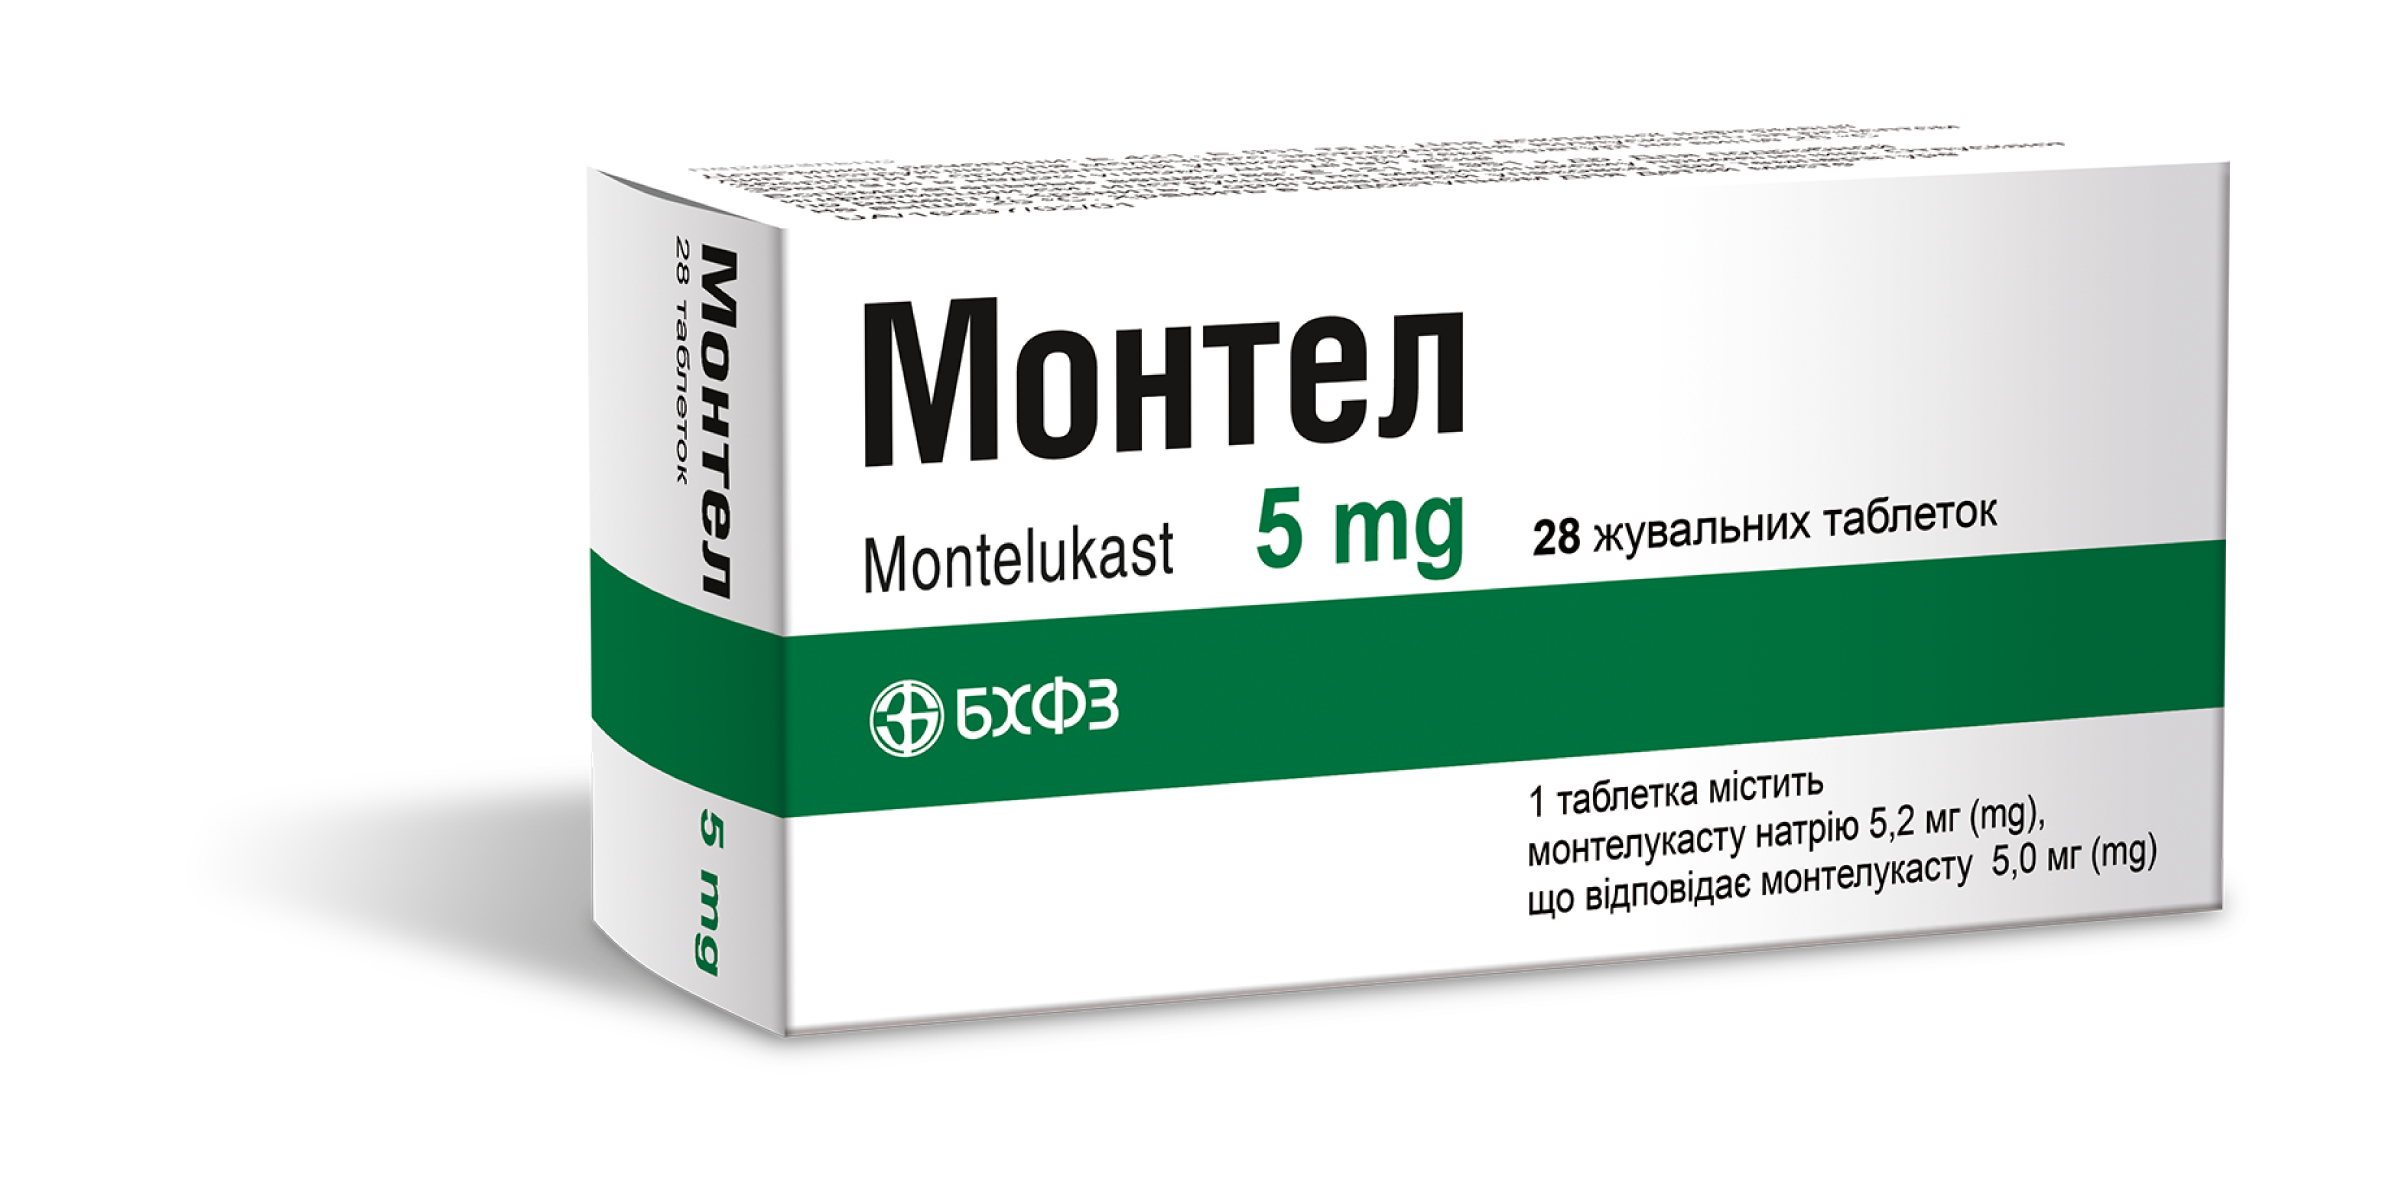 Монтел (5 мг) Montelukast / R03D C03